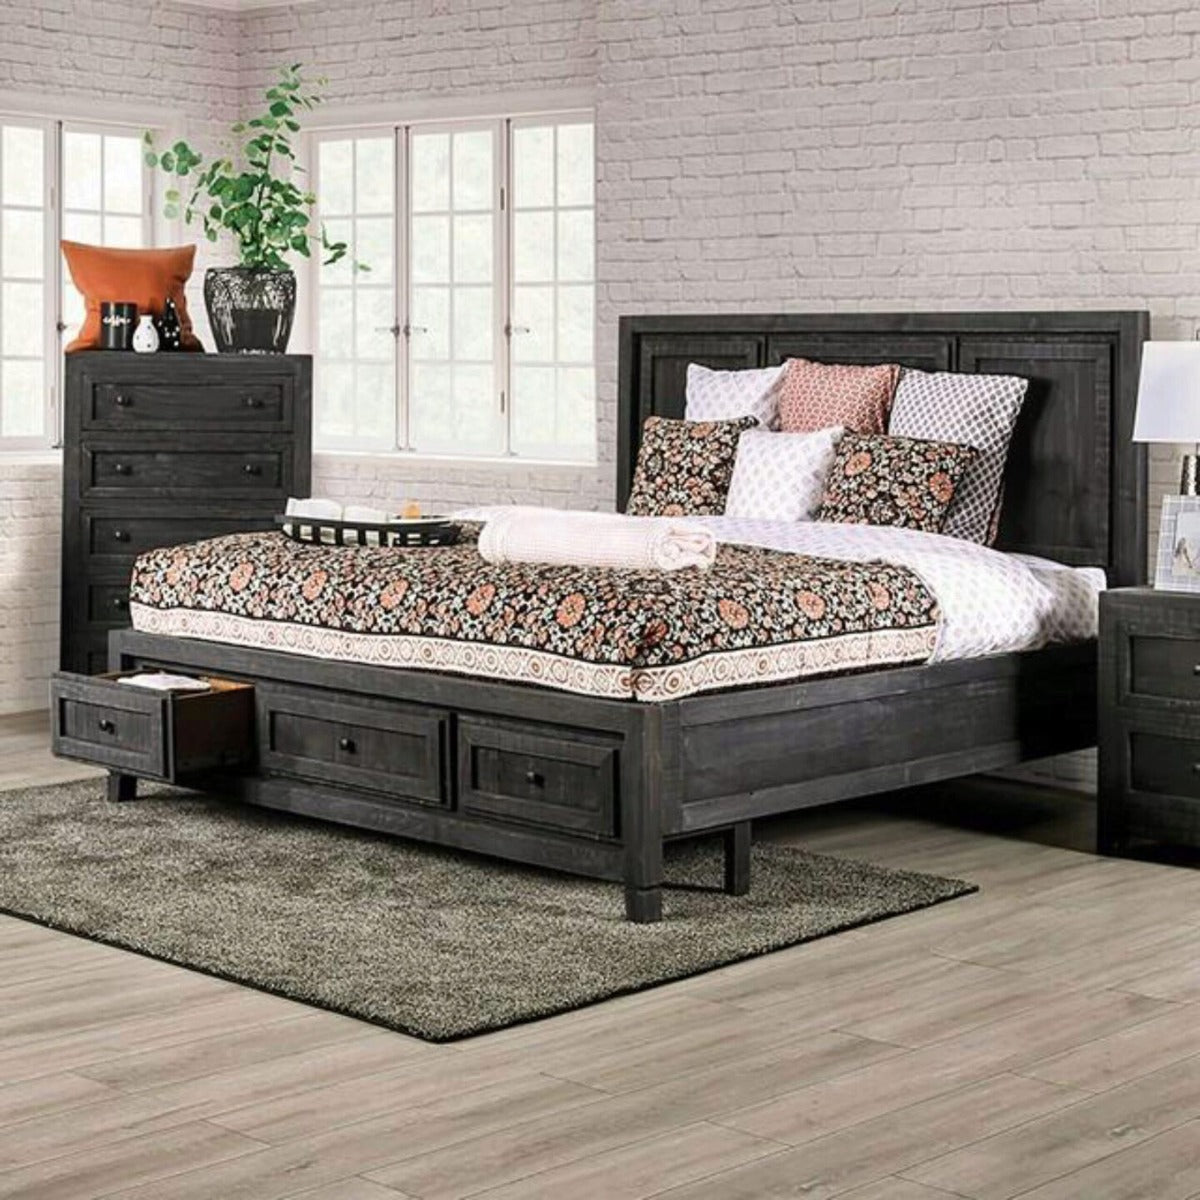 Oakridge Rustic Distressed Bedroom Set EM7074 - Charcoal Finish